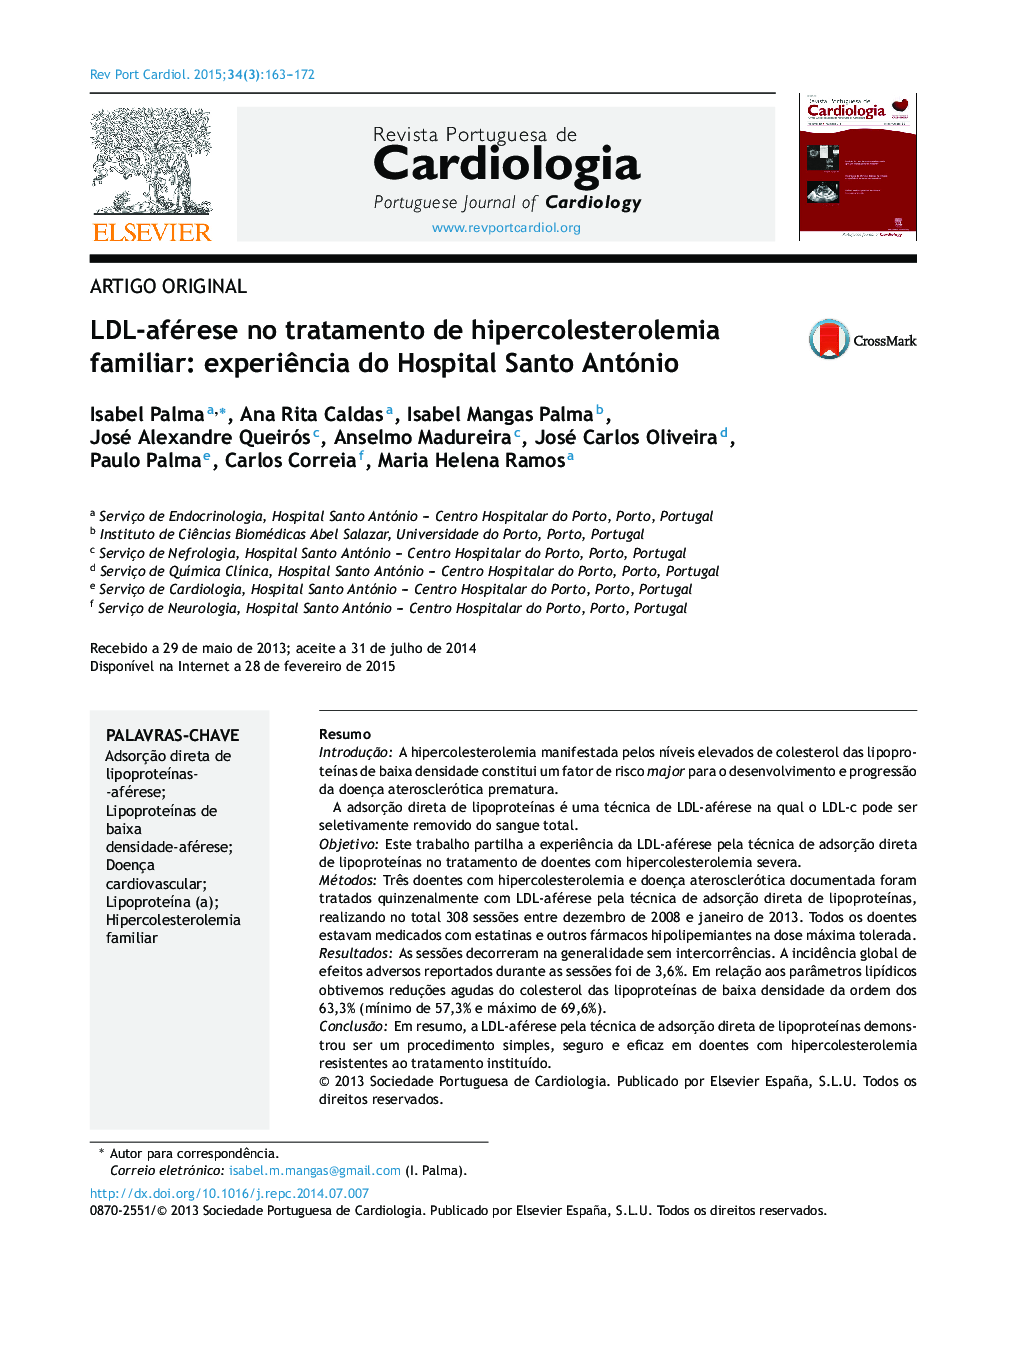 LDL‐aférese no tratamento de hipercolesterolemia familiar: experiência do Hospital Santo António